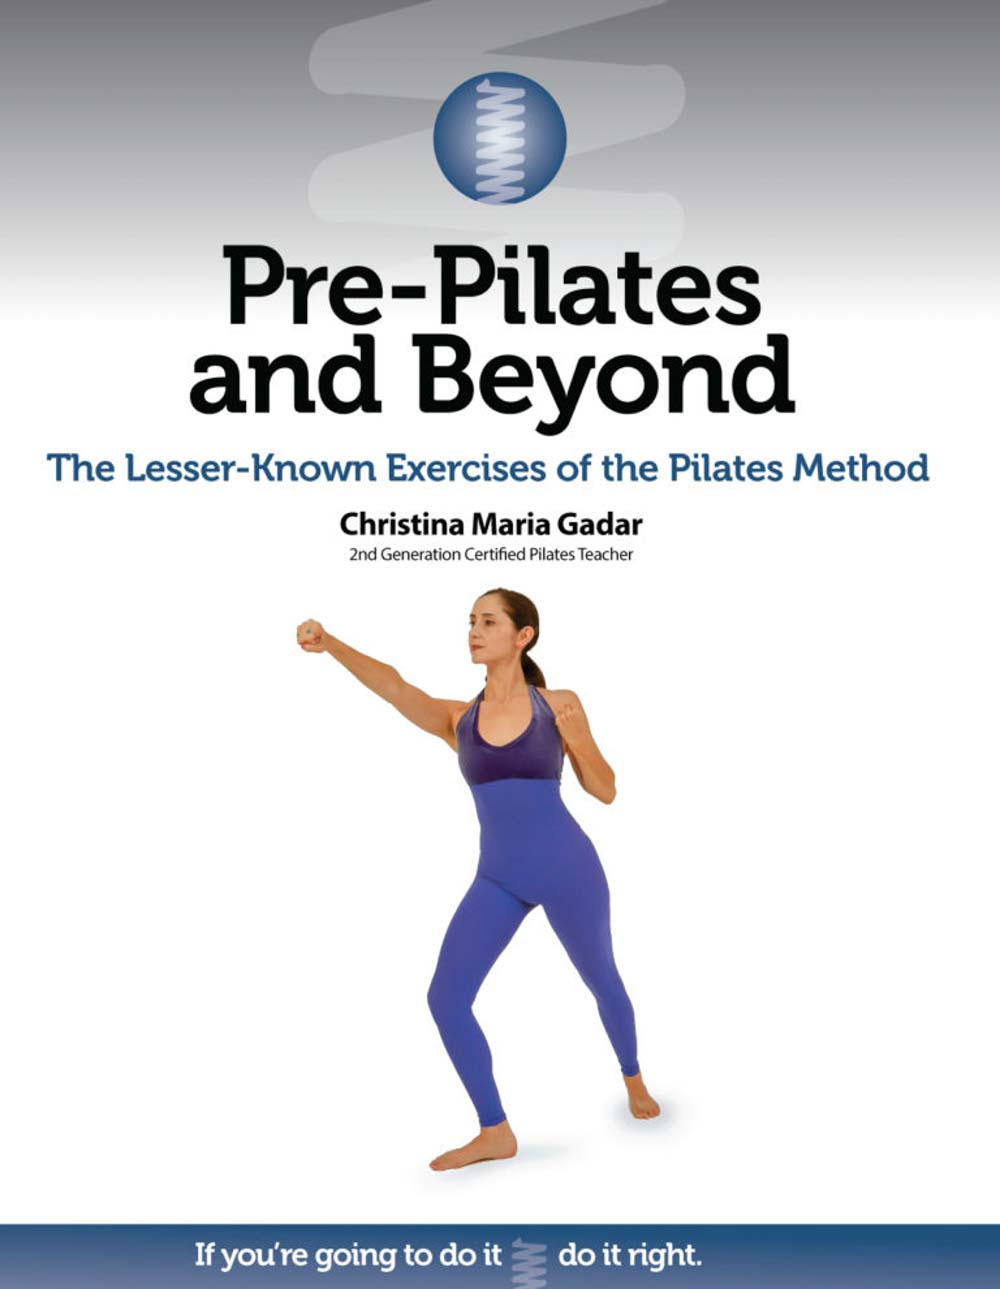 Fundamental Reformer Exercises: The Short Box Series - Pilates Andrea